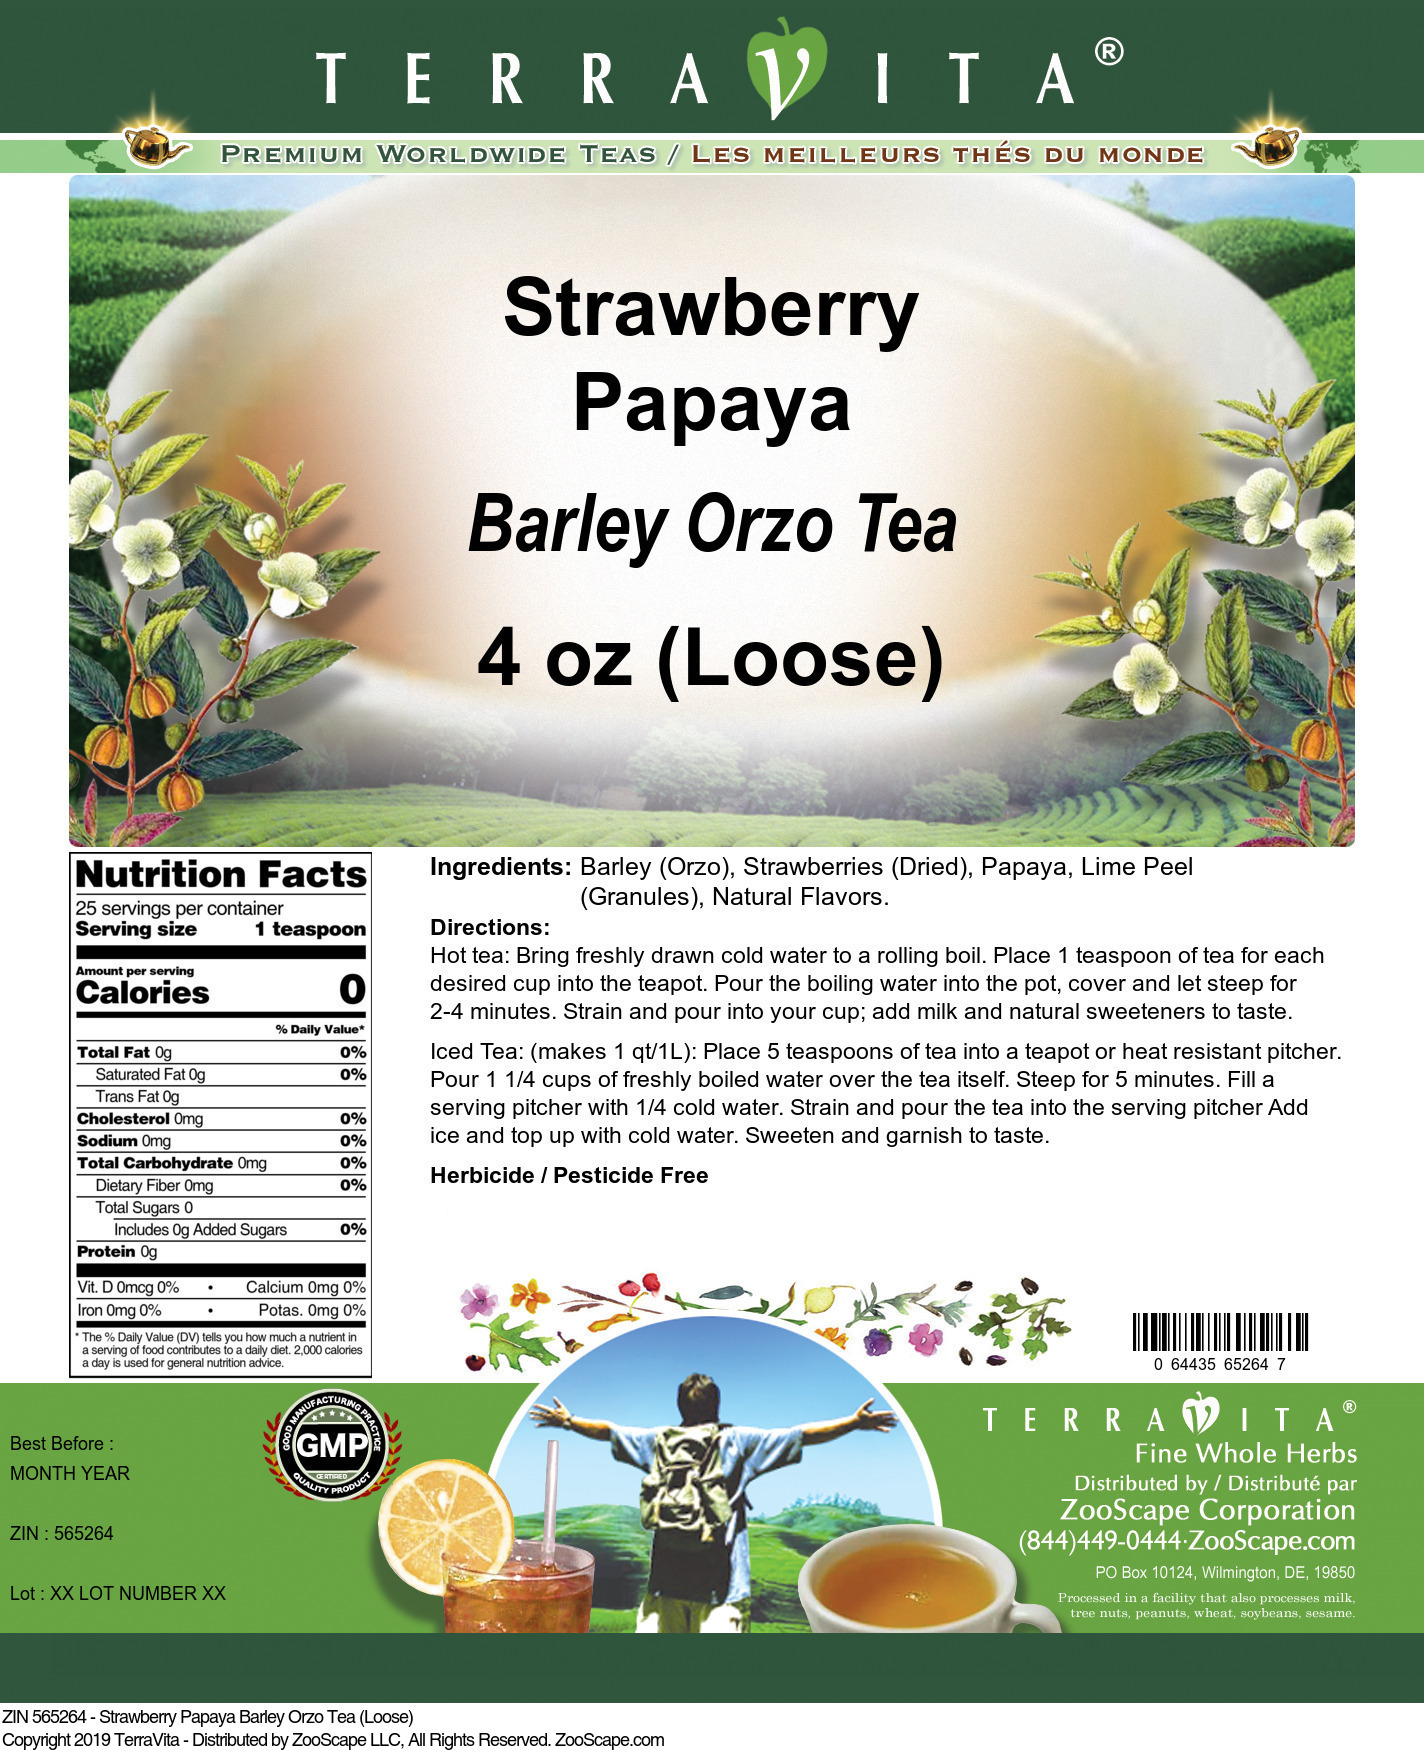 Strawberry Papaya Barley Orzo Tea (Loose) - Label